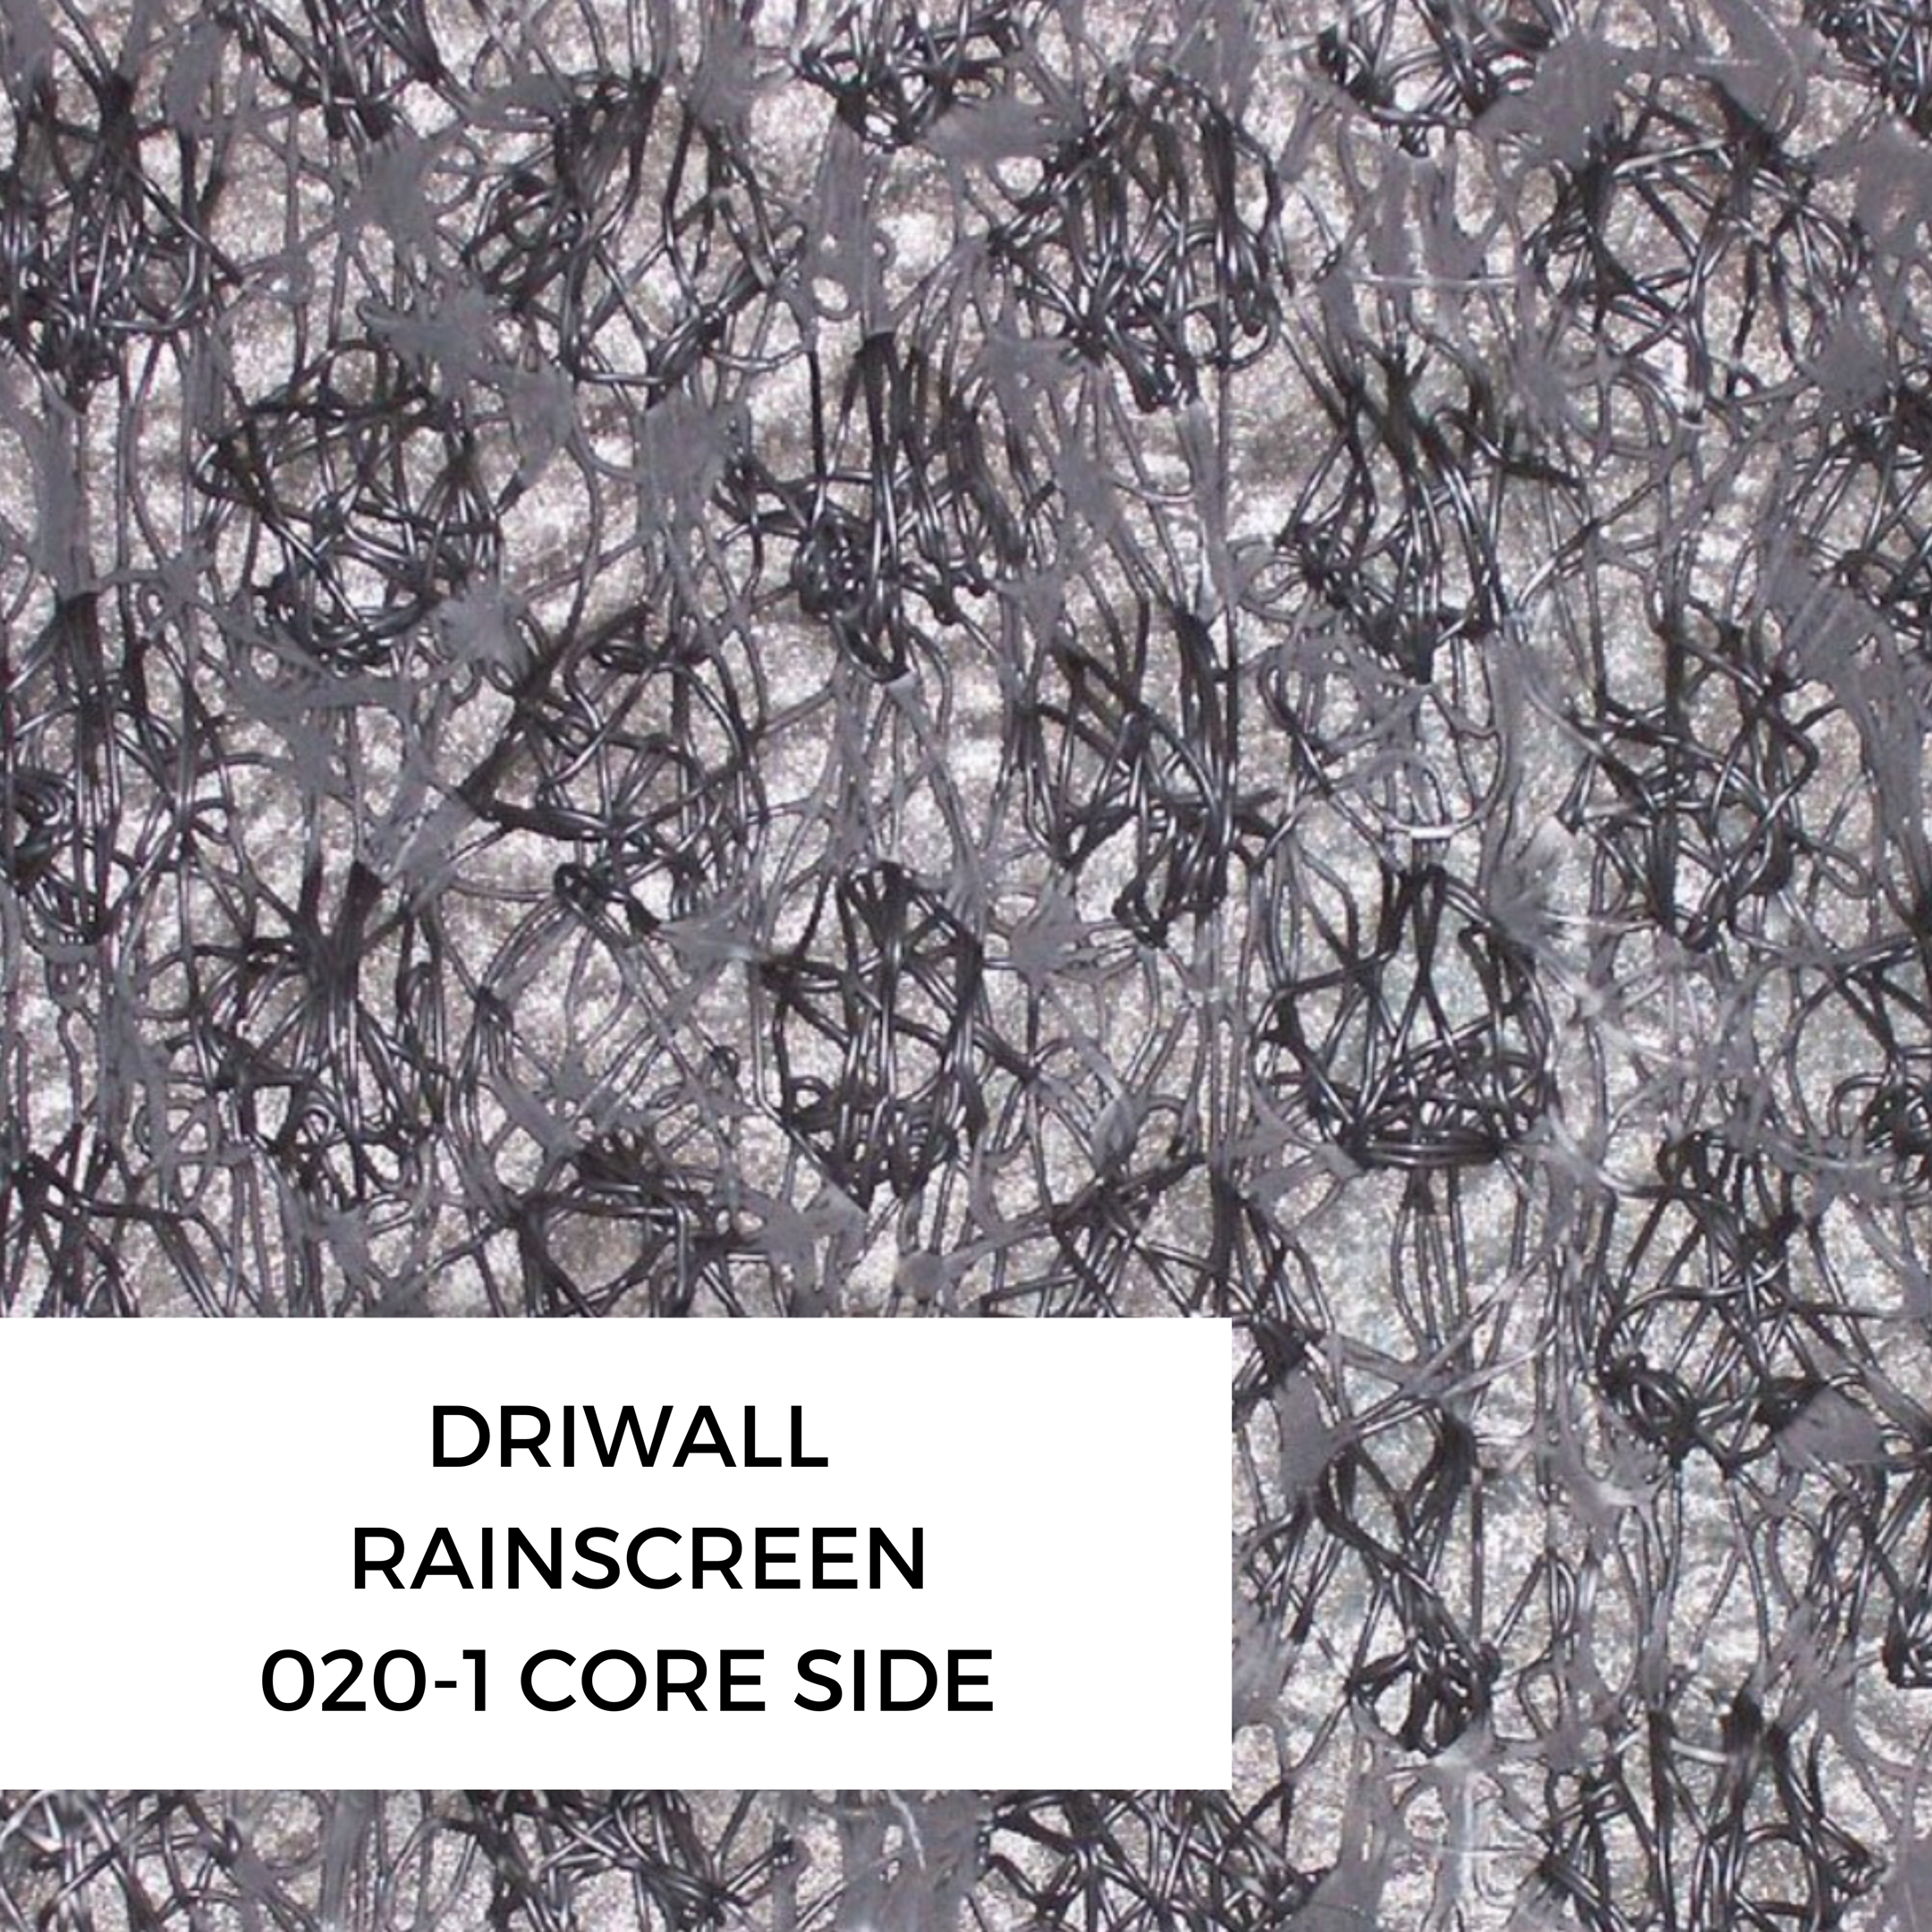 Copy of DRIWALL RAINSCREEN ROLL.PNG